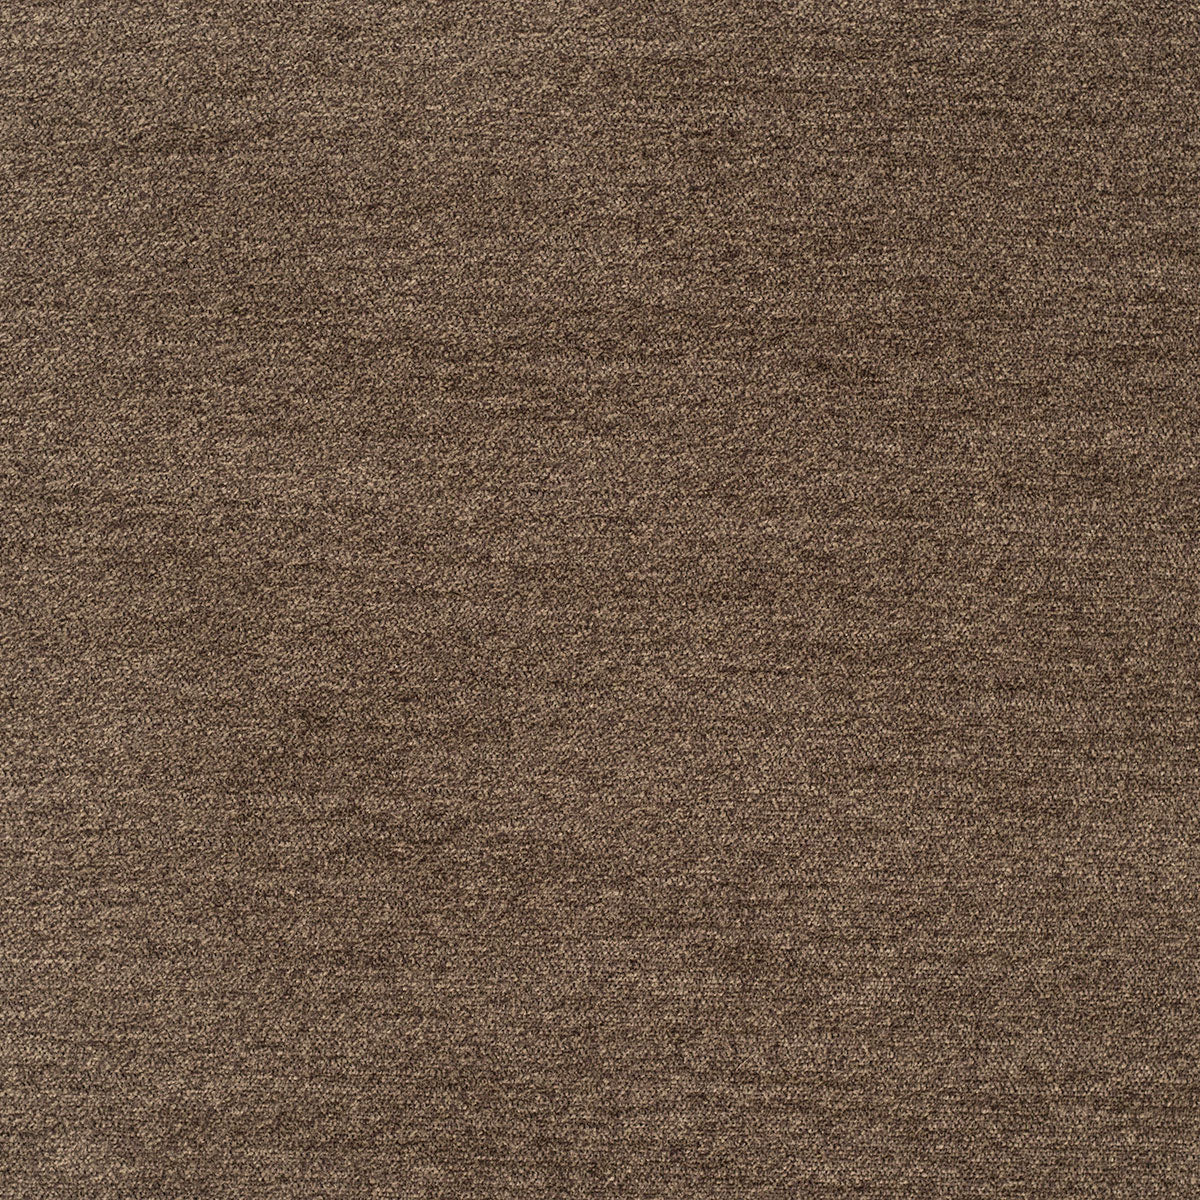 Tan Standard fabric sample